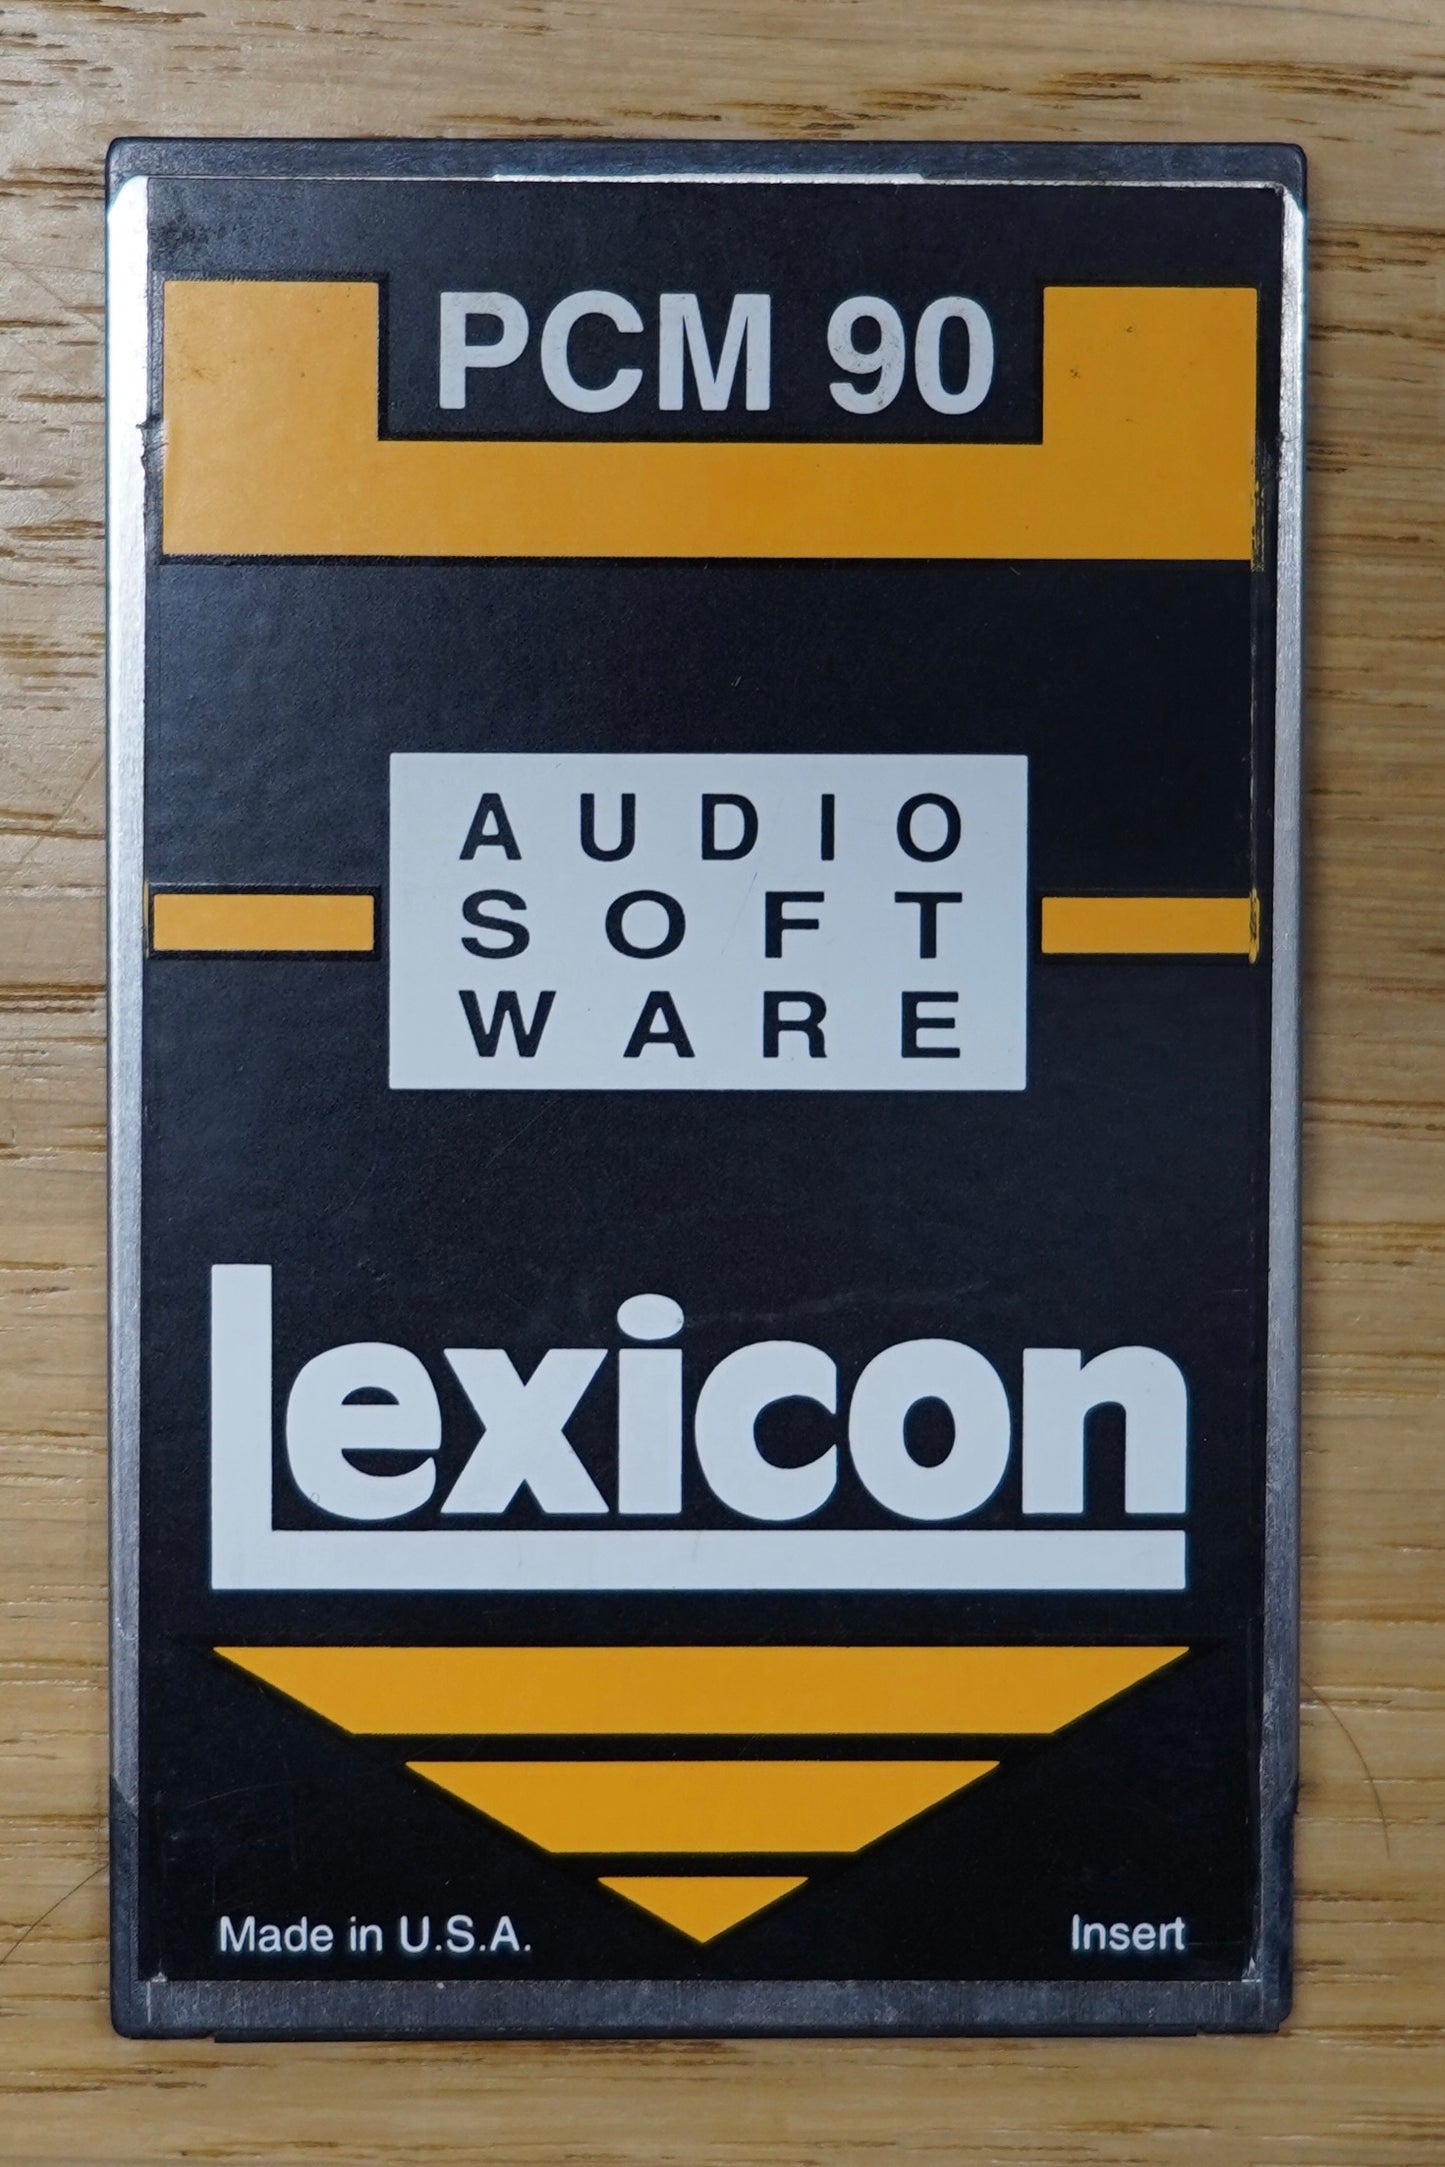 Lexicon PCM90 Dual RVB V1.0 Algorithm Card